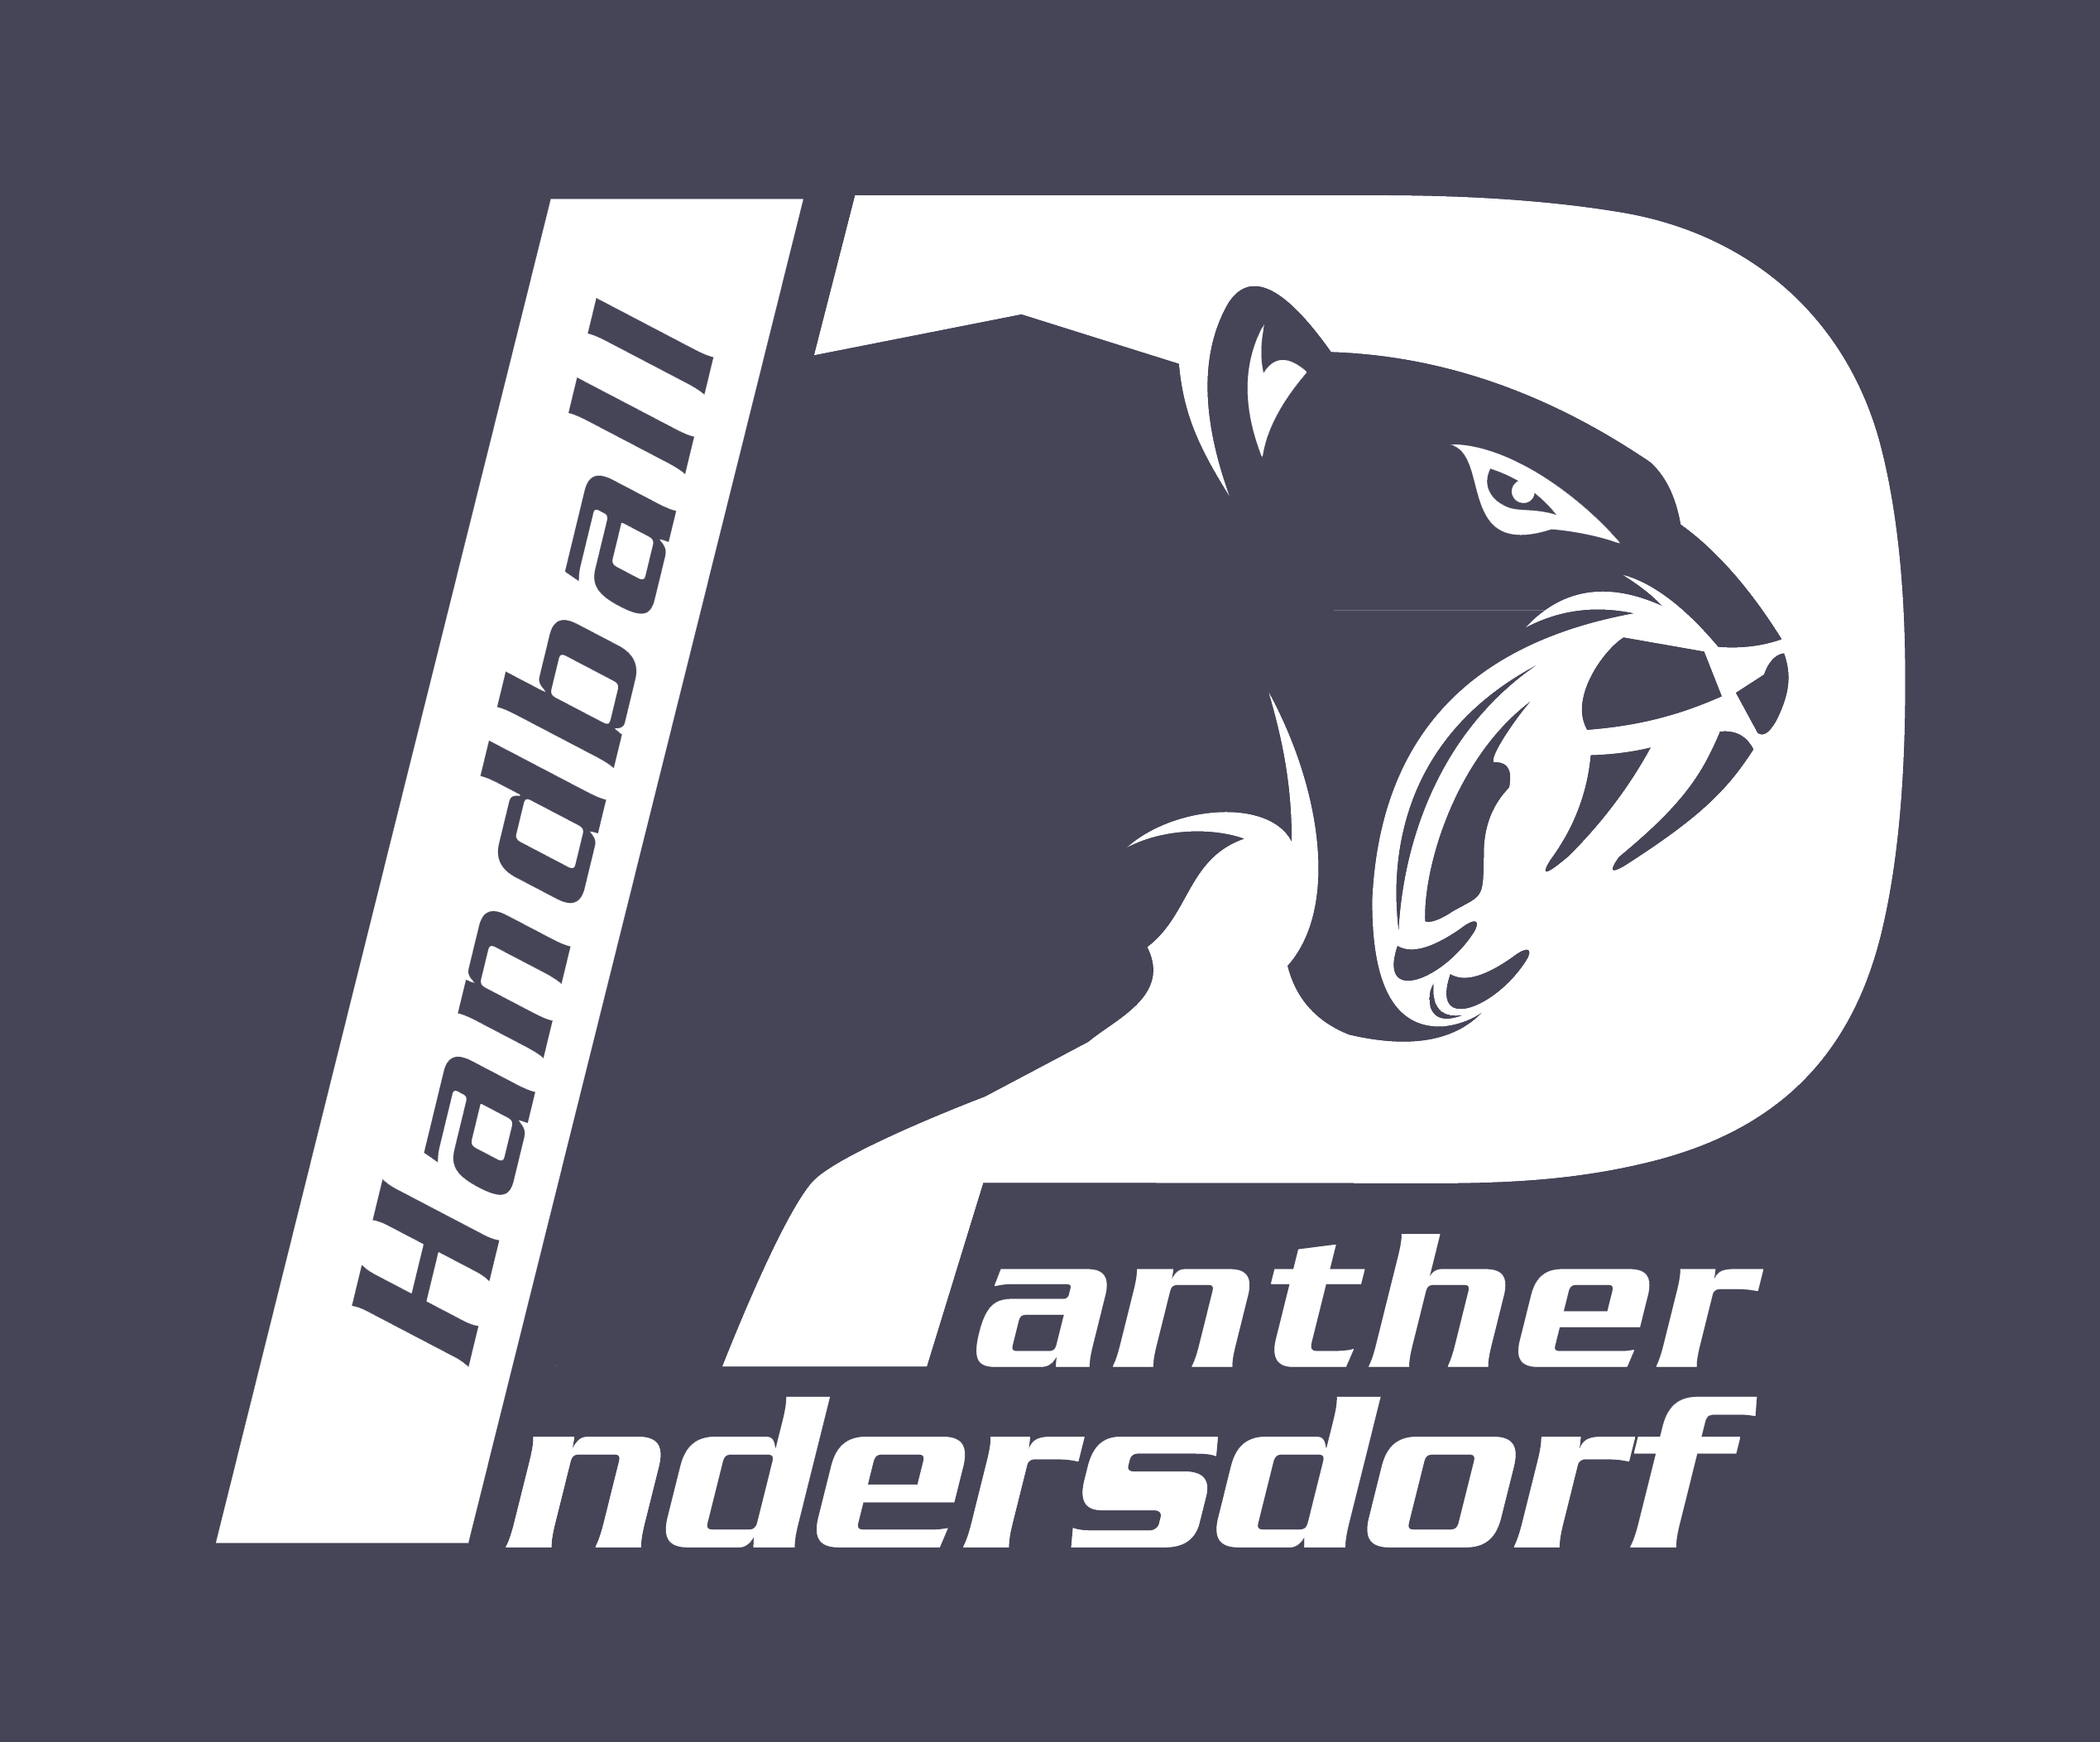 Panther Indersdorf